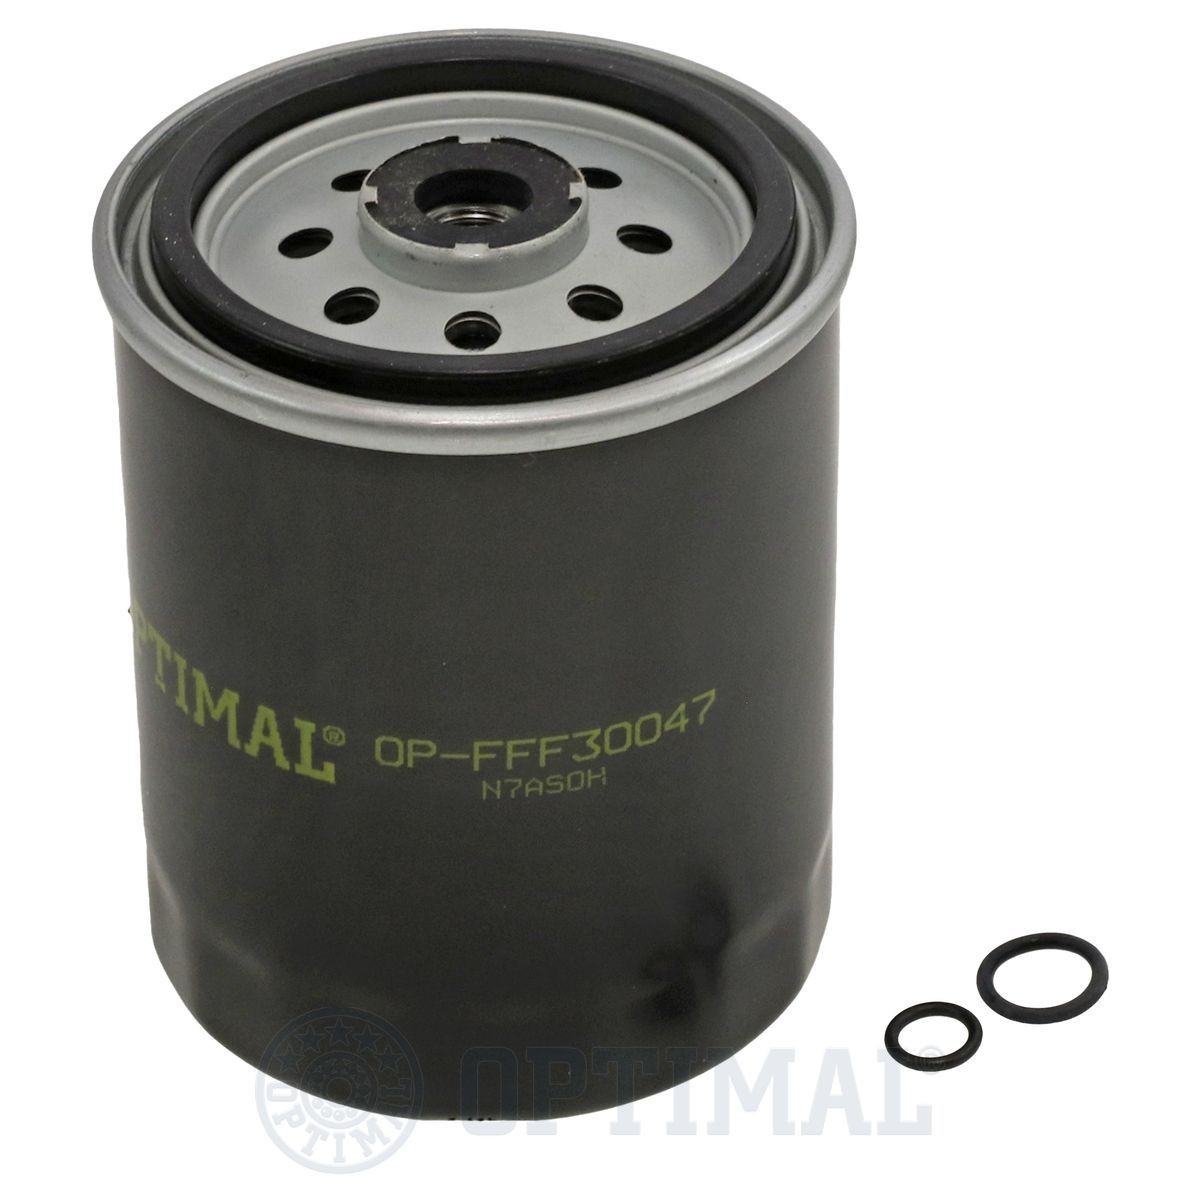 OPTIMAL OP-FFF30047 Fuel filter A661 092 3101